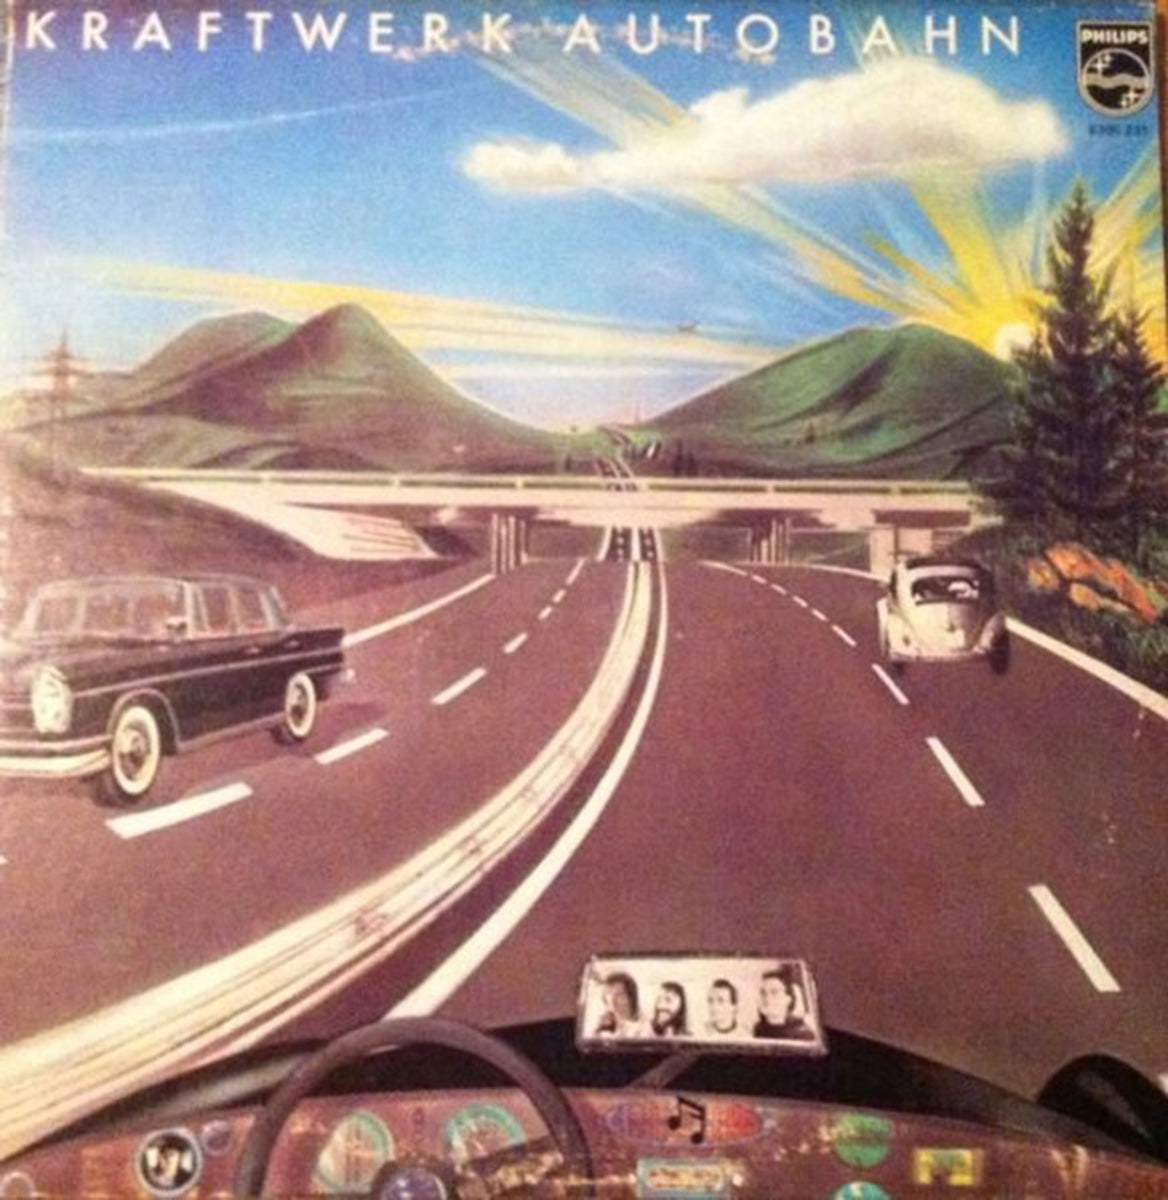 Kraftwerk – Autobahn - 1974 Original!